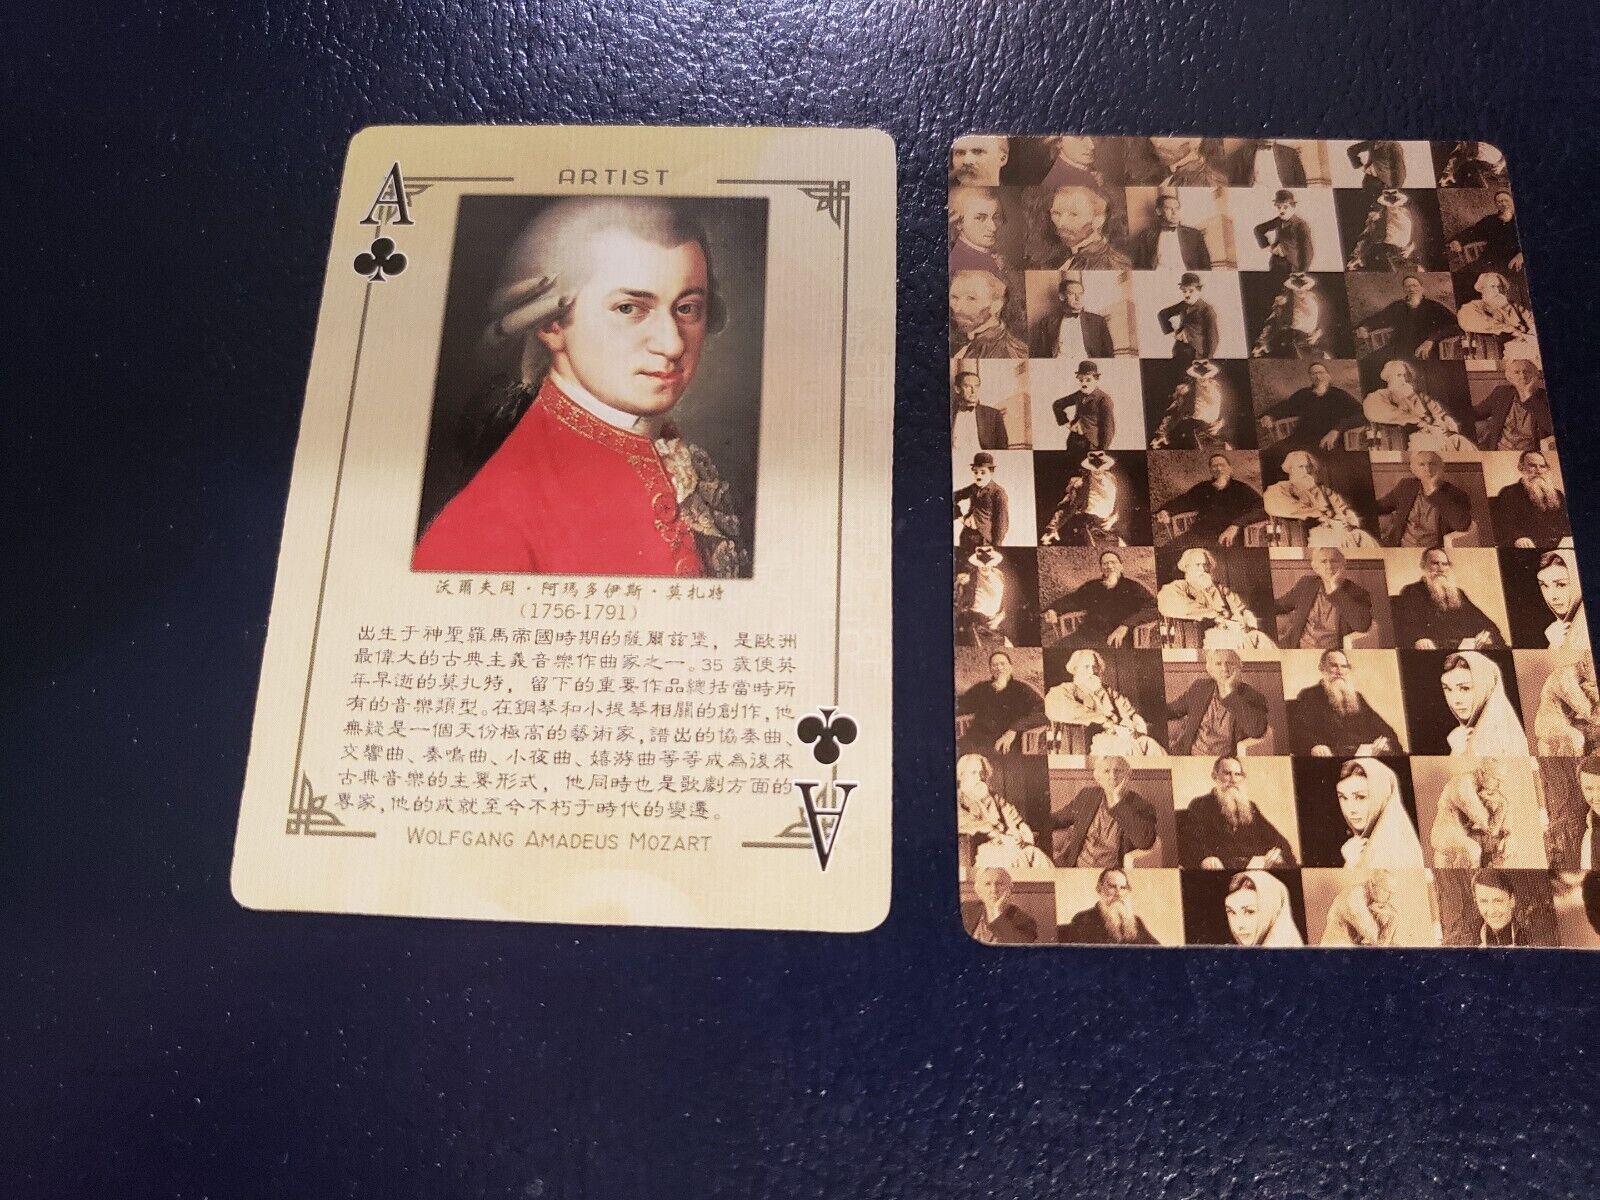 Wolfgang Amadeus Mozart Composer Artist Playing Card WOW